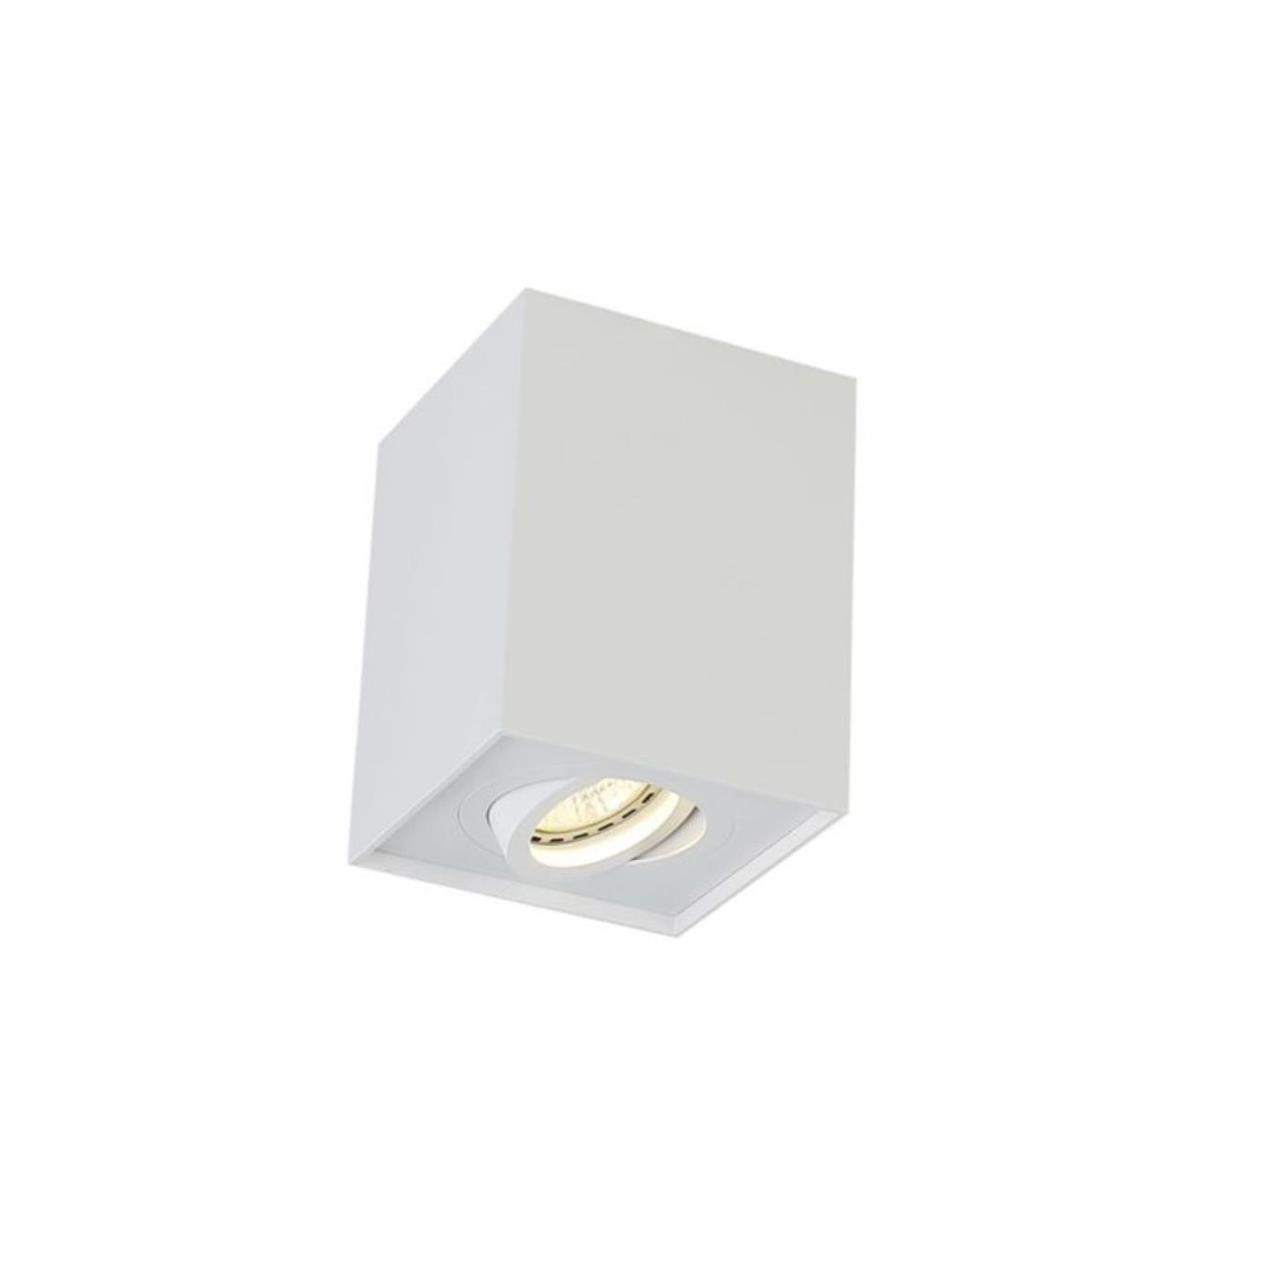 90159440 Светильник потолочный CLT 420 CLT 420C WH 1 лампа 2.8 м² цвет белый STLM-0120144 CRYSTAL LUX